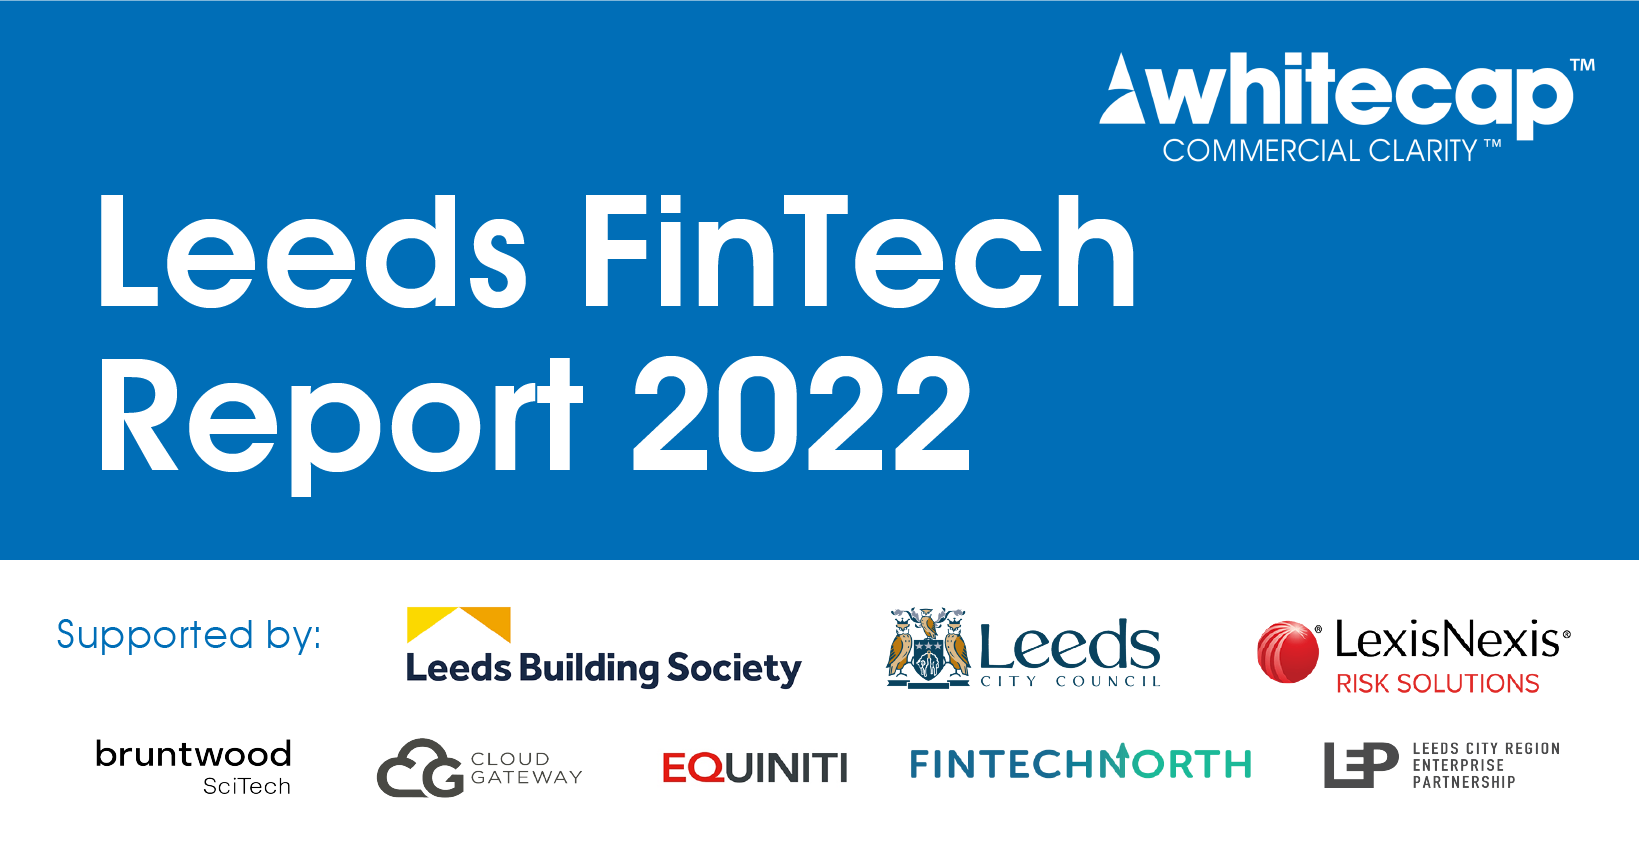 New report will shine light on Leeds FinTech ecosystem